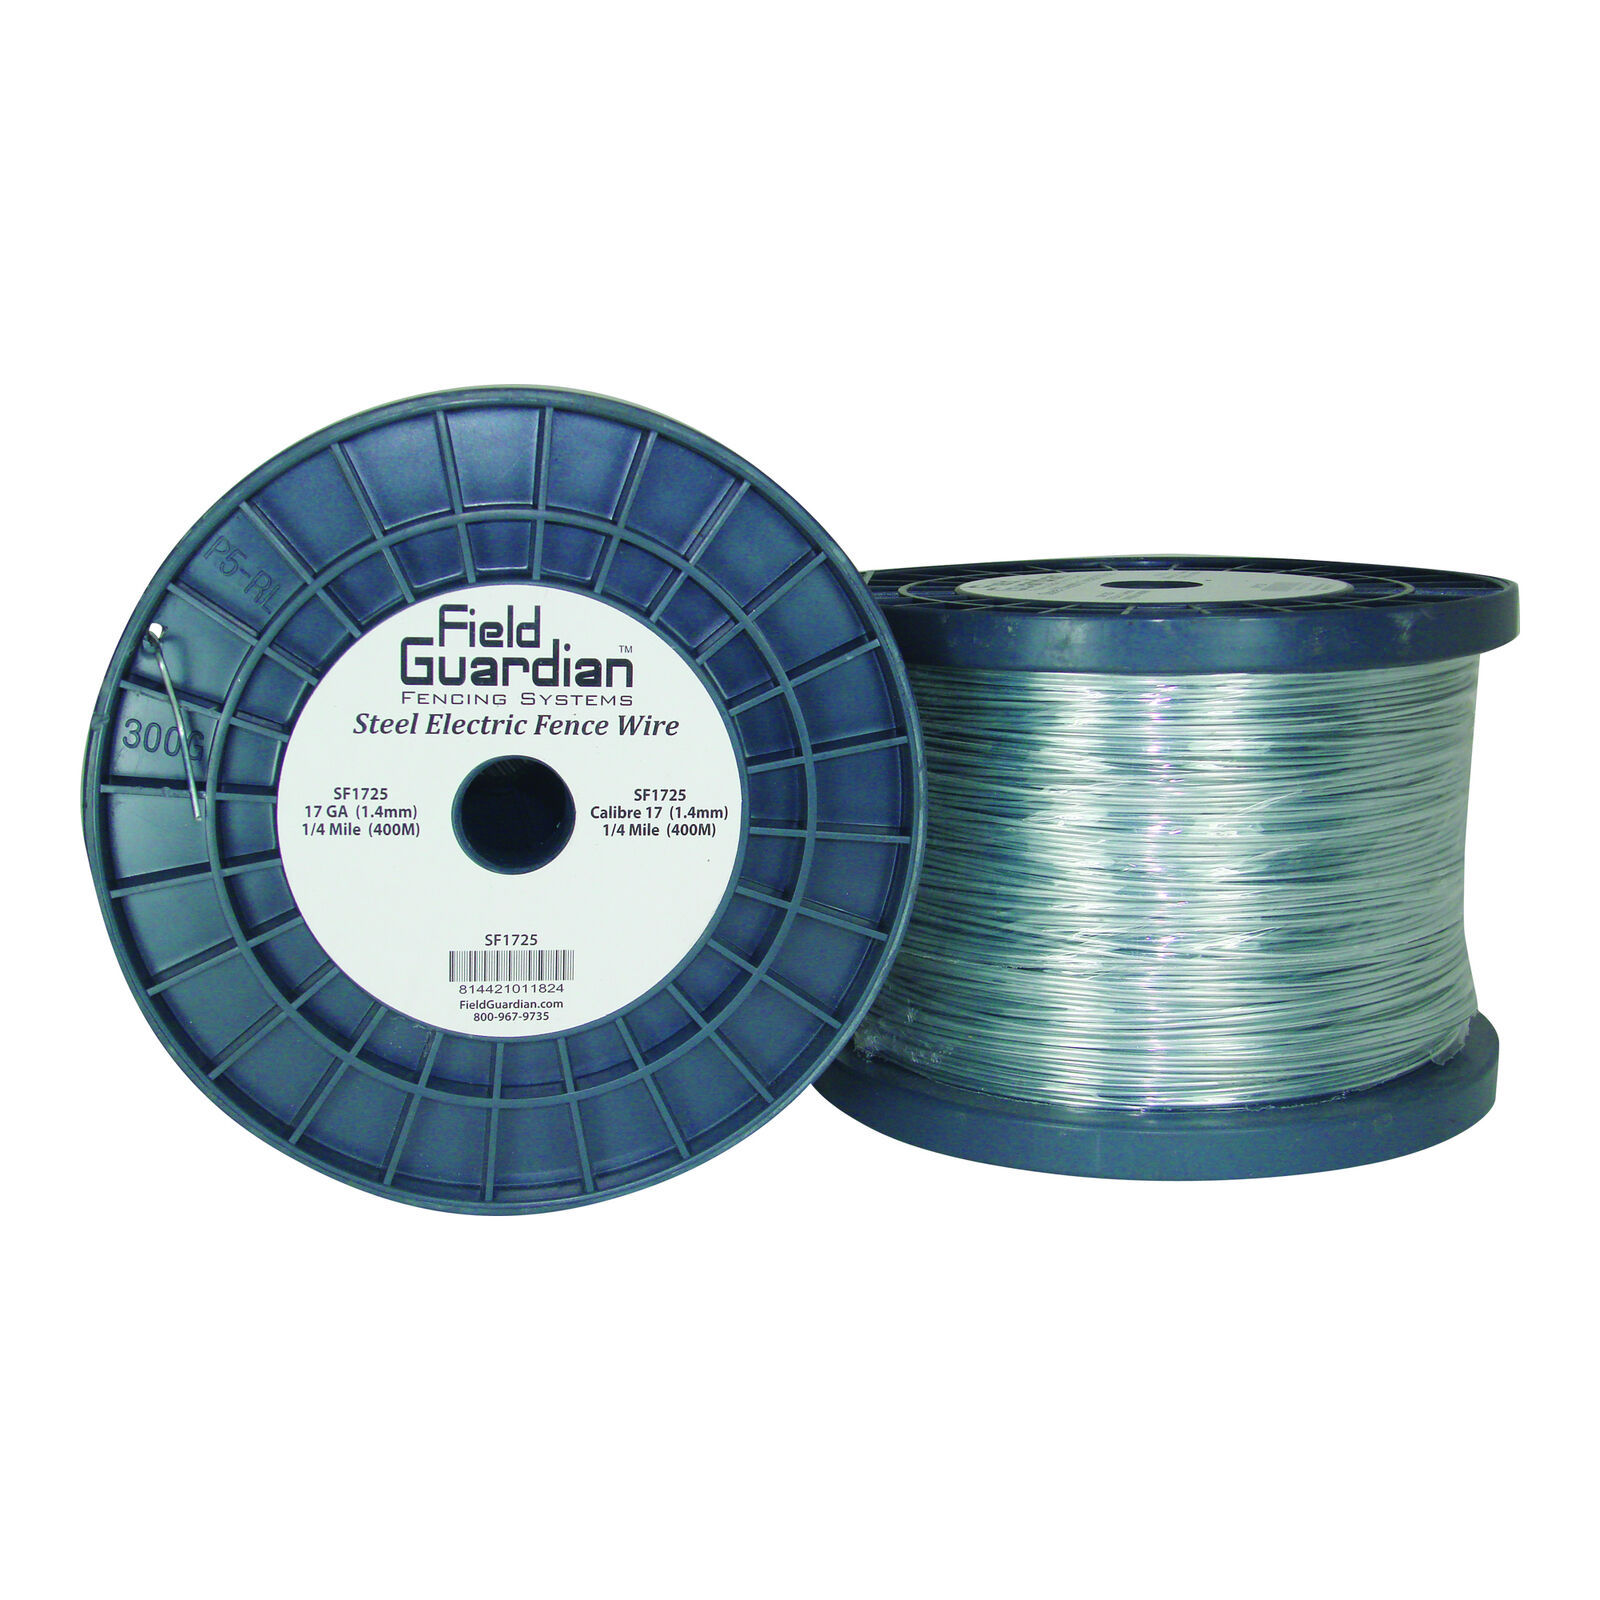 Field Guardian 17 GA Galvanized Steel wire 1/4 Mile (USA) SF1725  814421011824